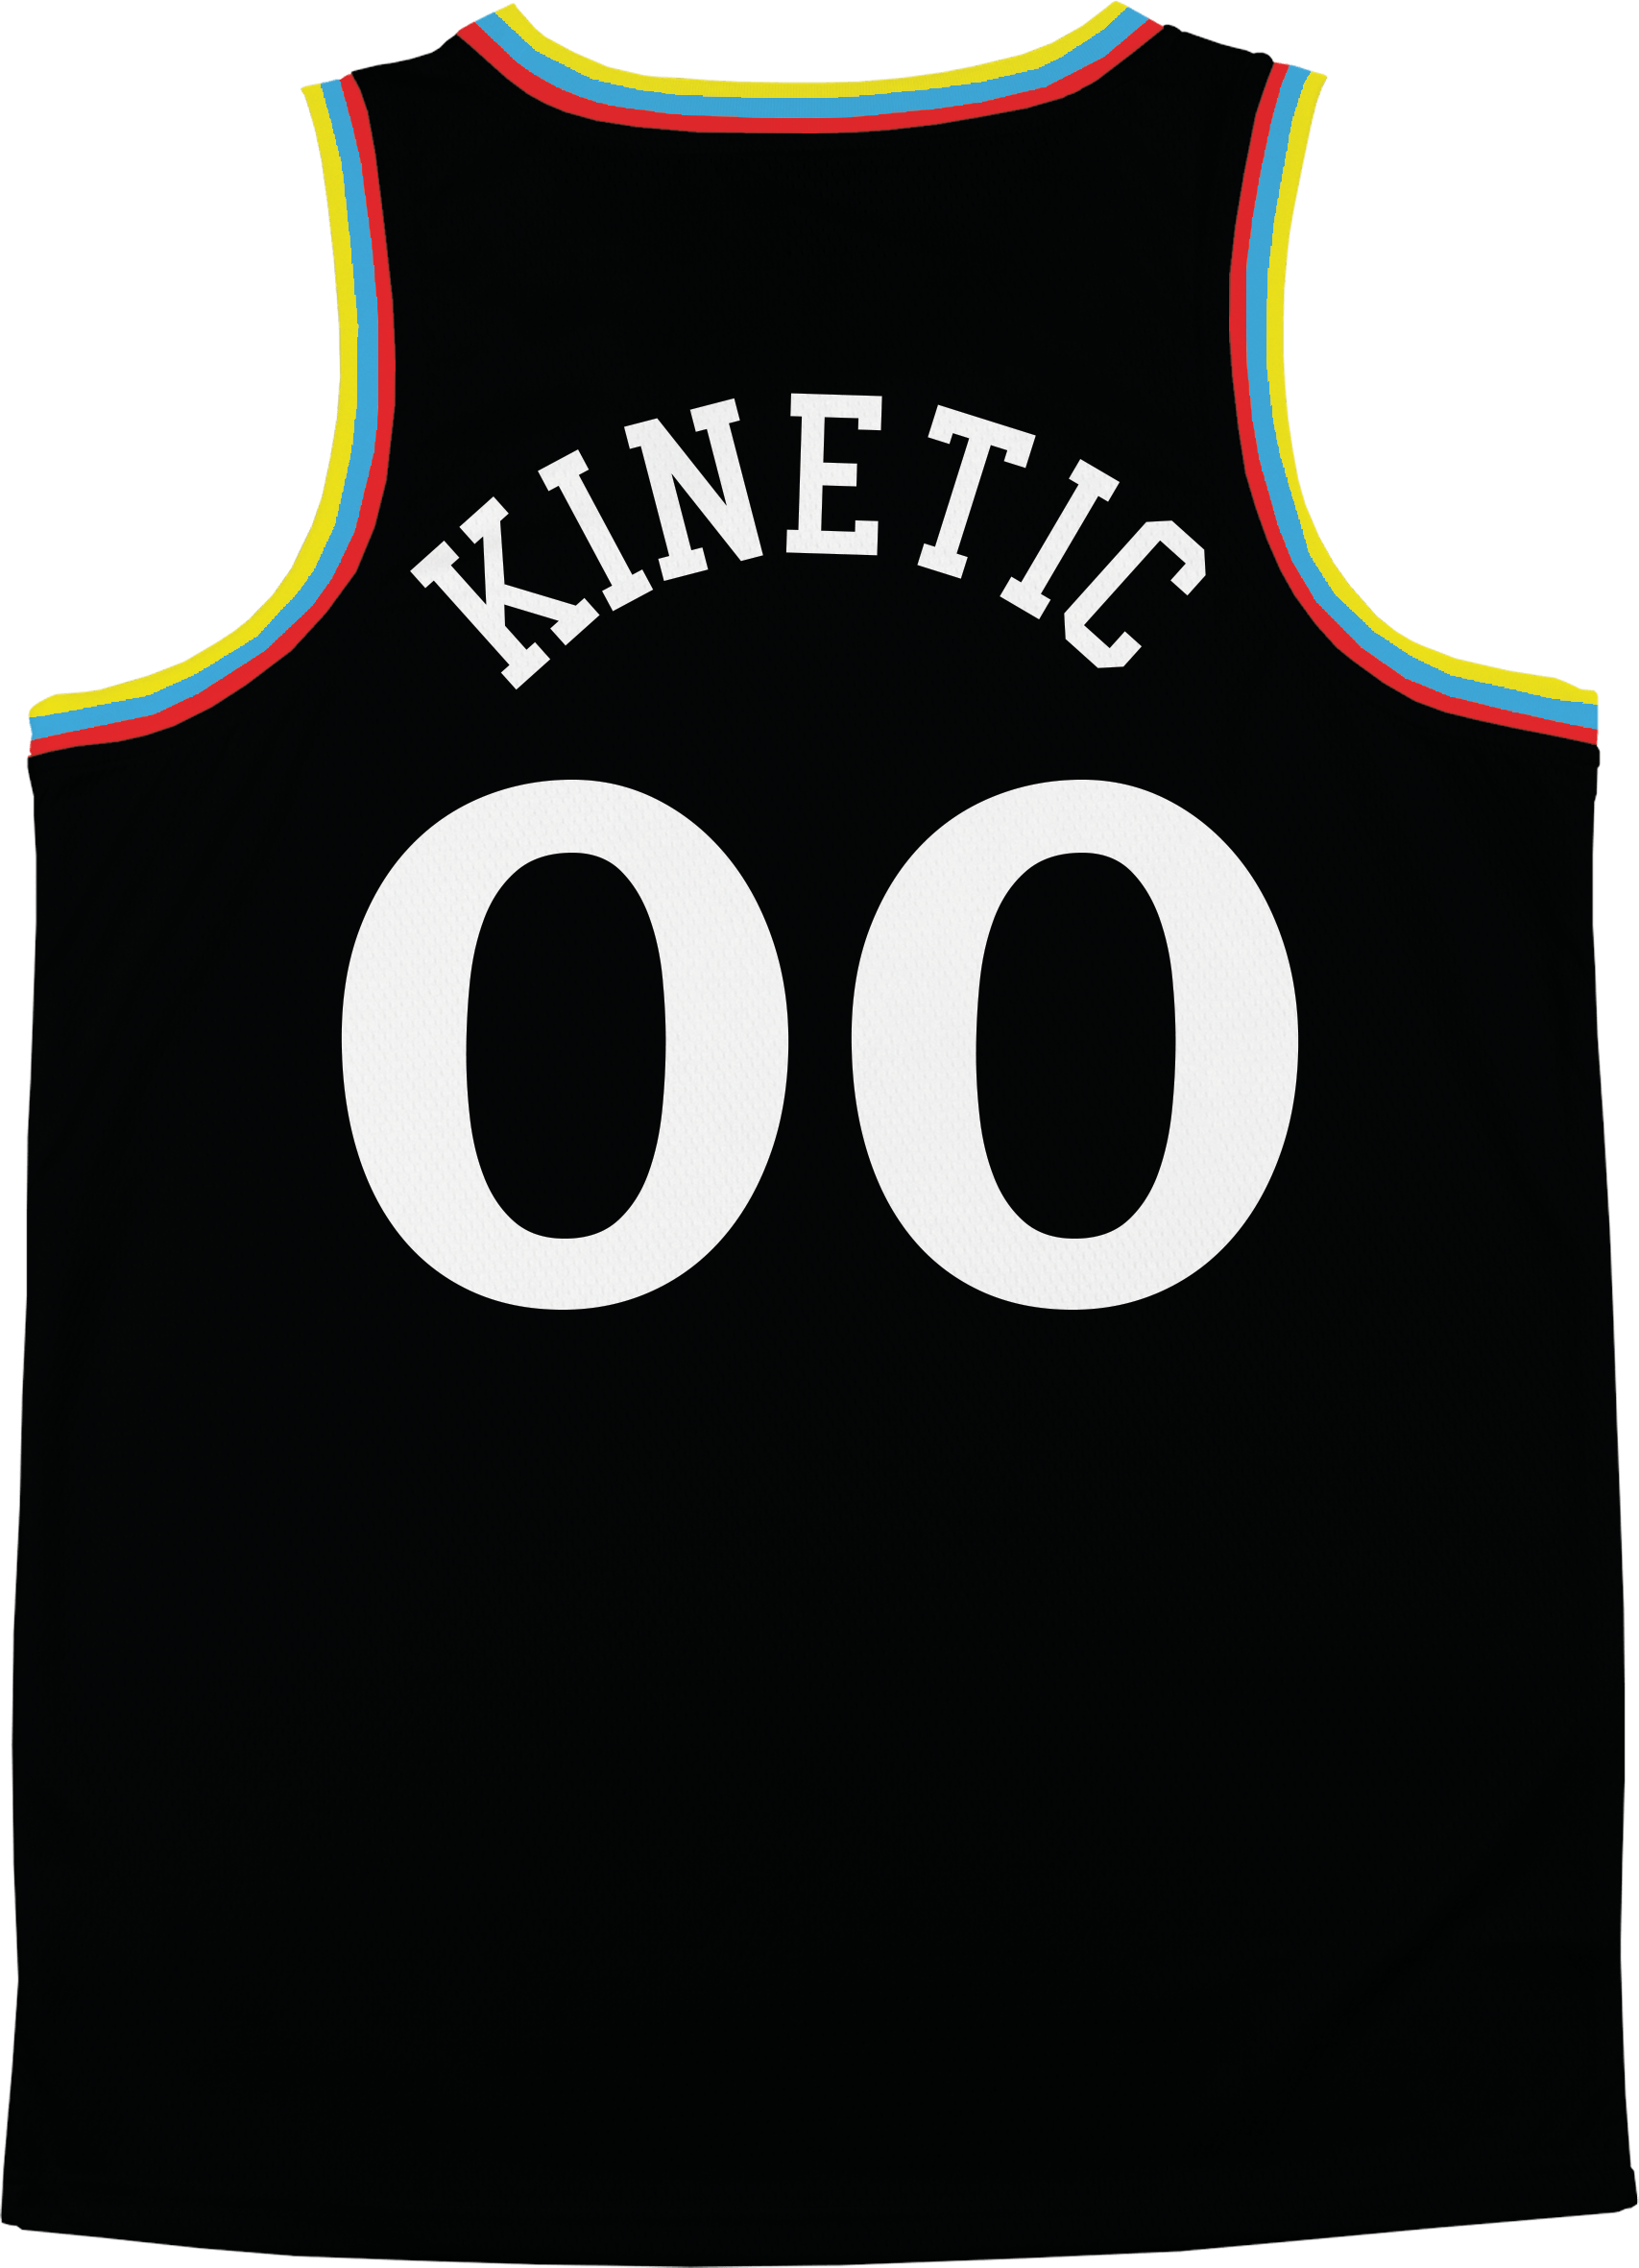 Kappa Delta Rho - Crayon House Basketball Jersey Premium Basketball Kinetic Society LLC 